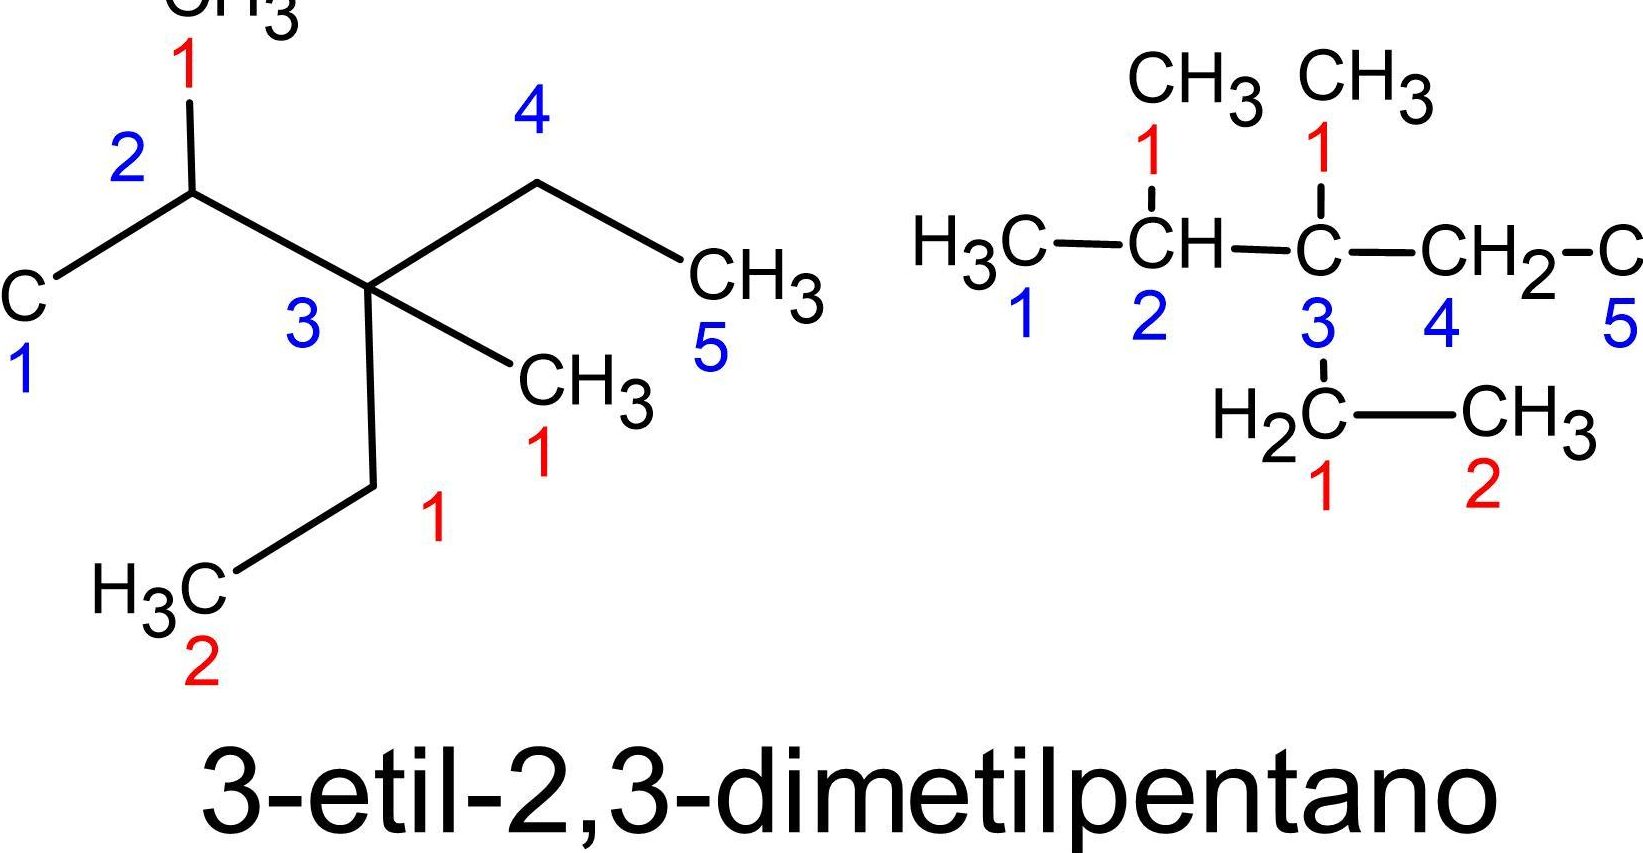 La estructura del 3-etil-2,2-dimetilpentano.